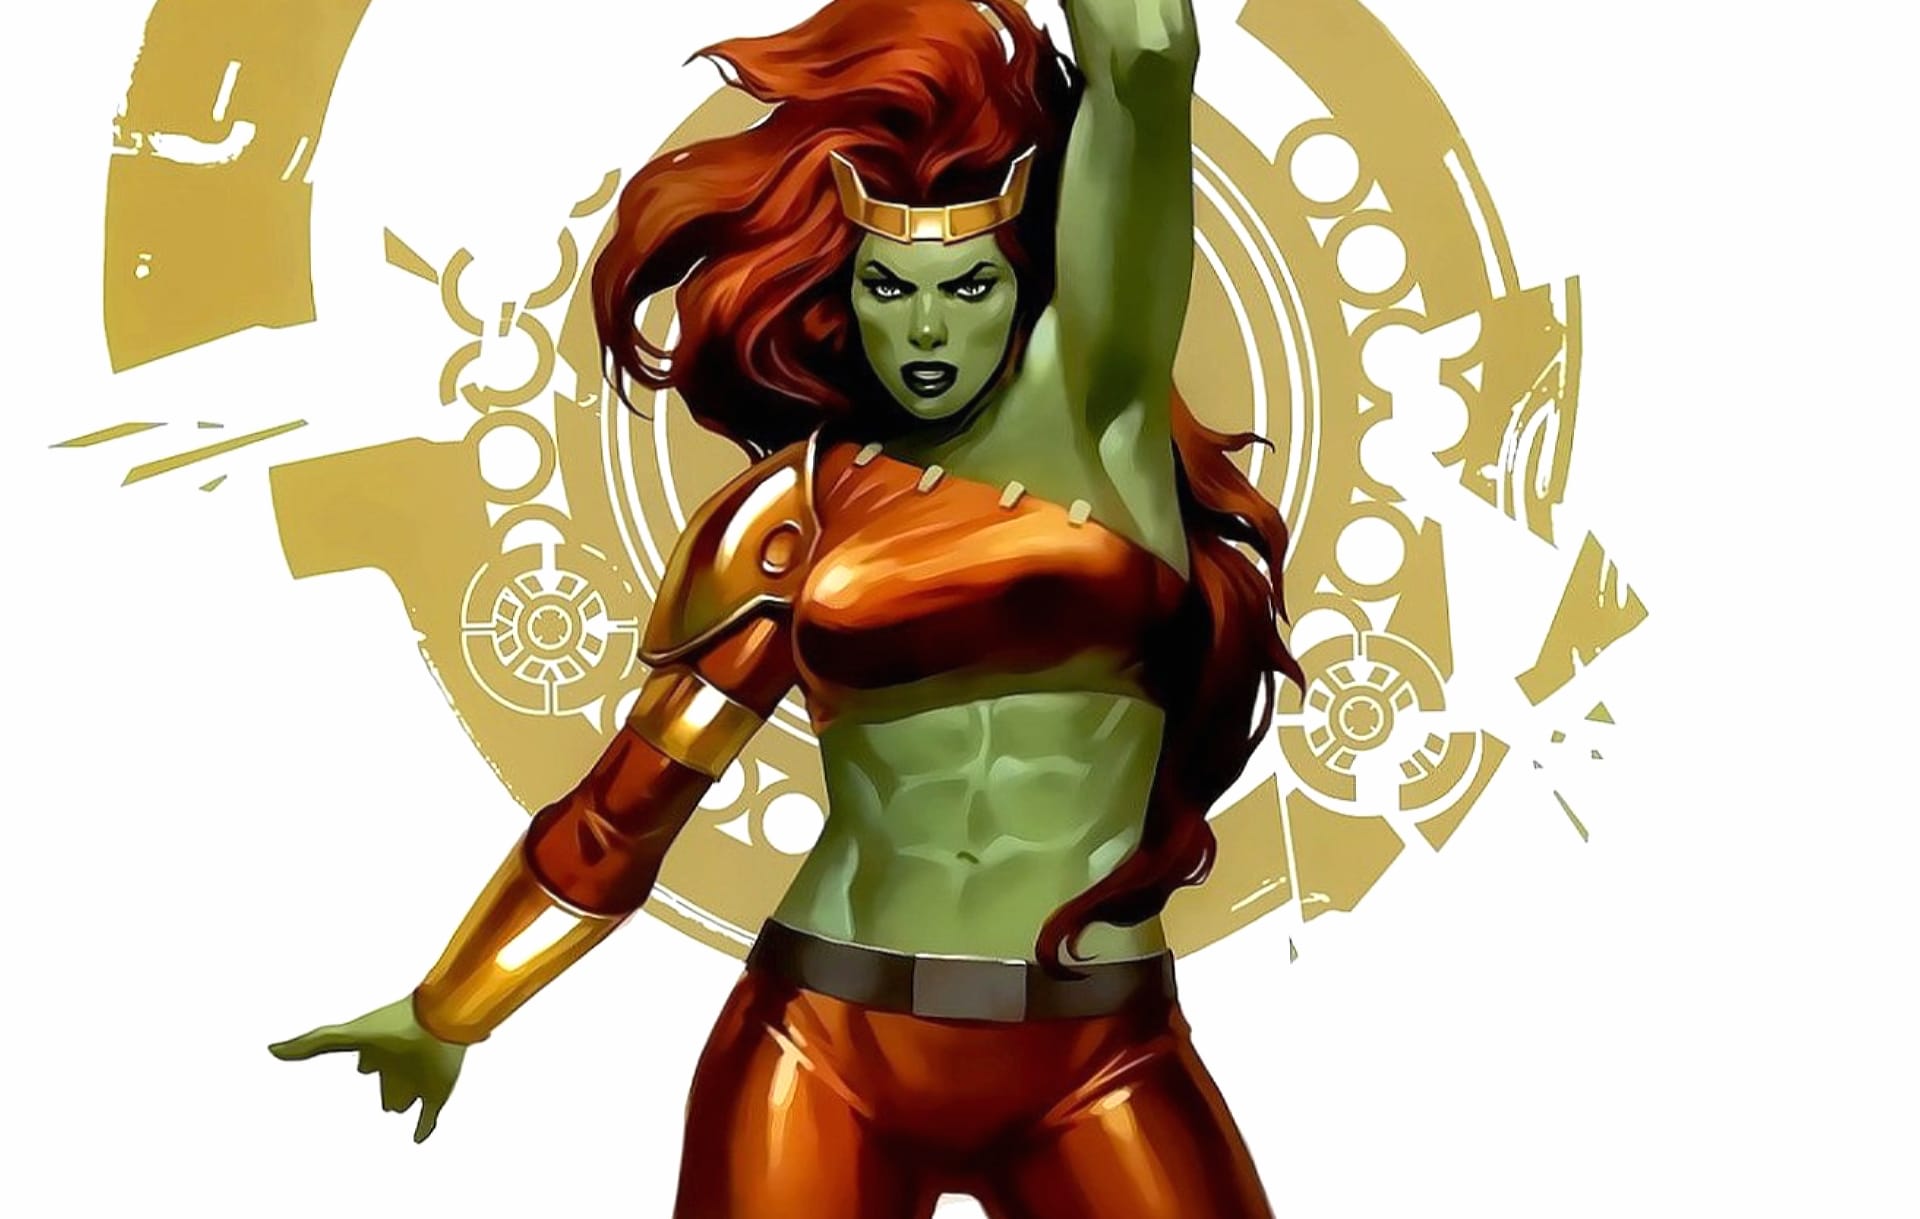 Savage She-Hulk at 1024 x 1024 iPad size wallpapers HD quality